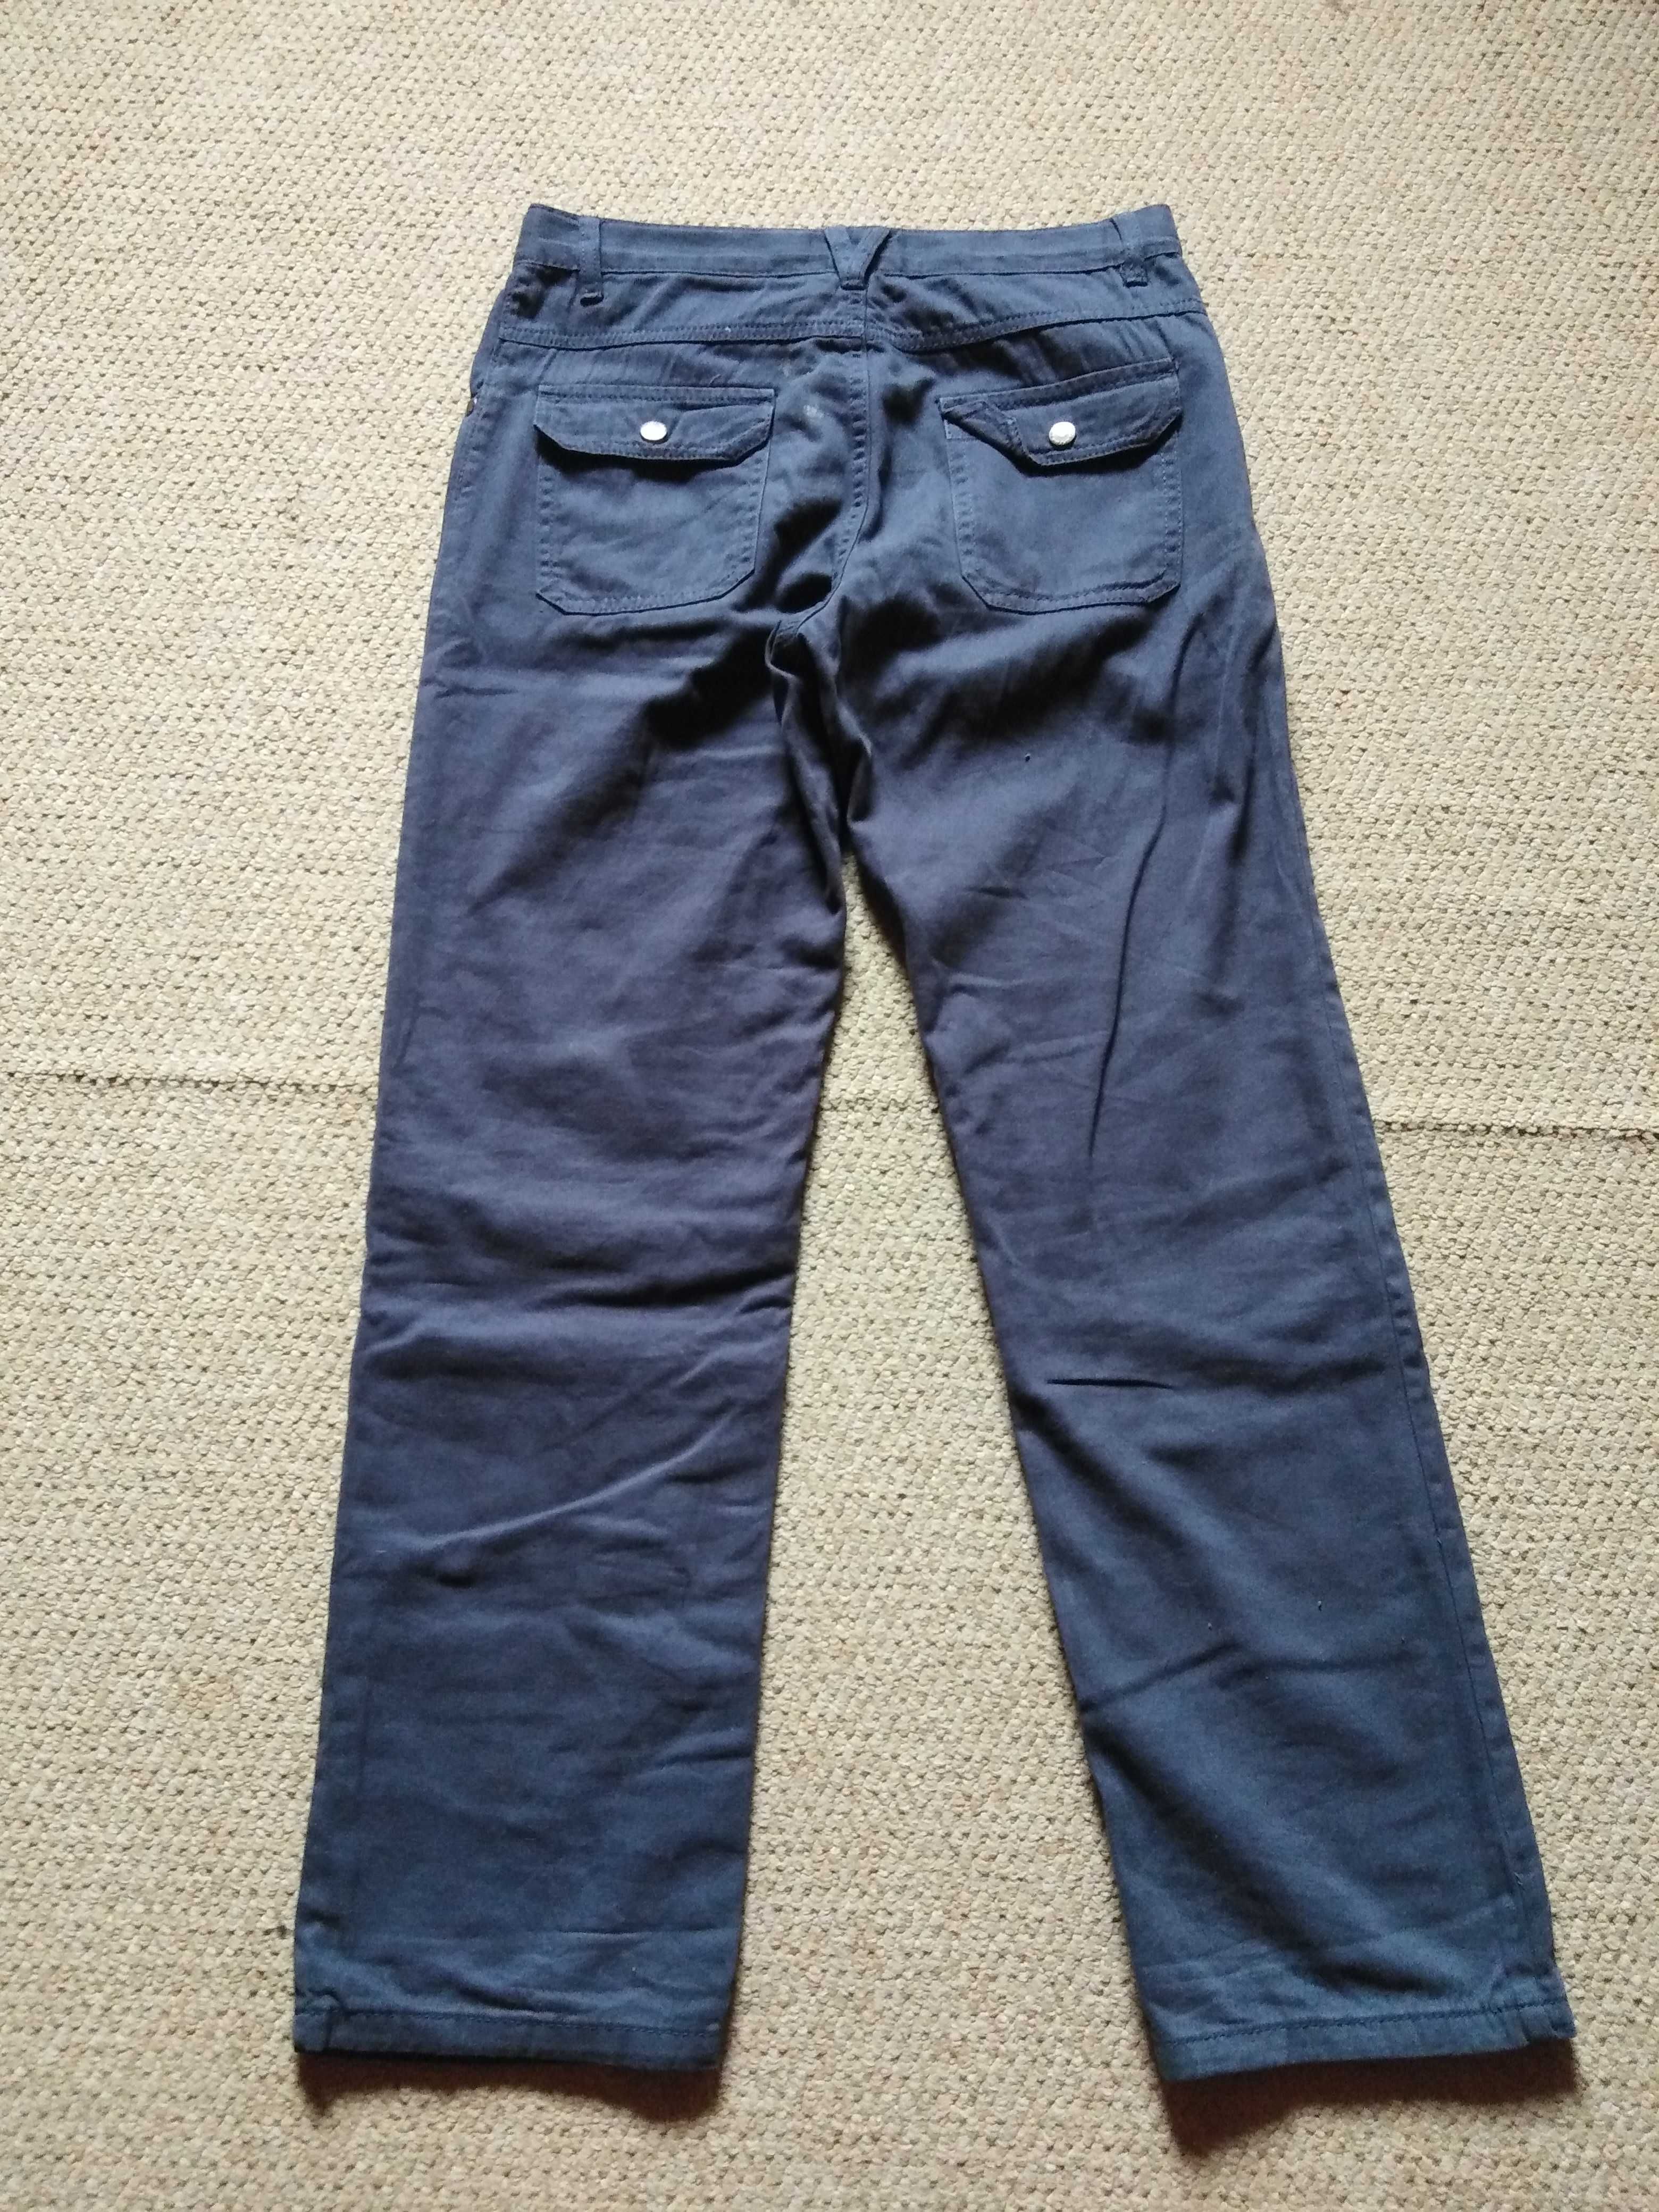 Pepperts lekko ocieplane spodnie r. 146-152 cm